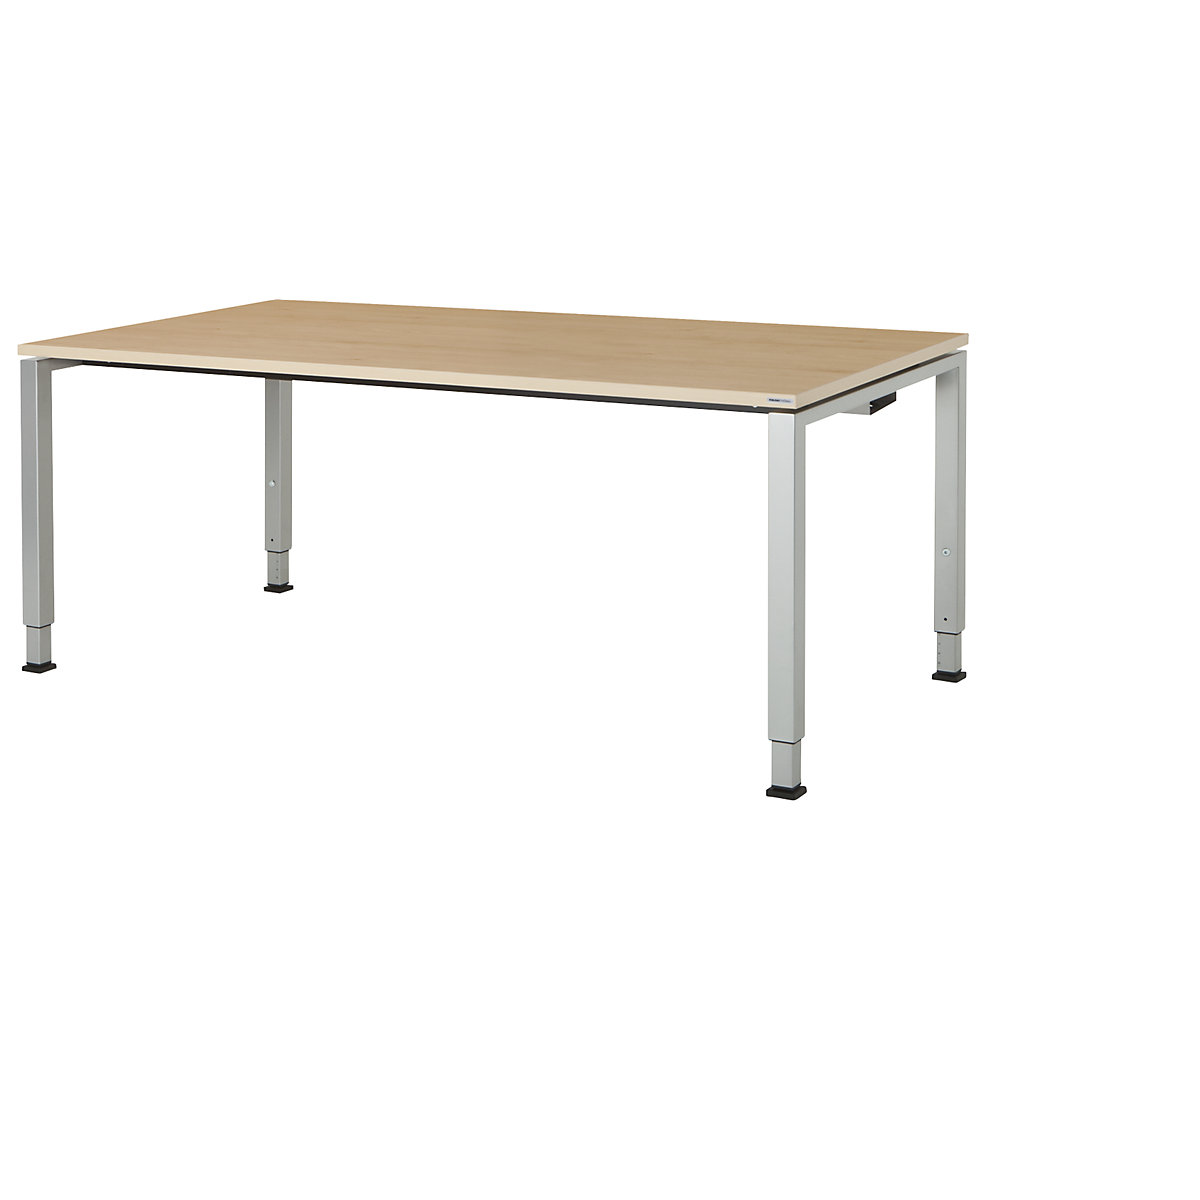 Pravokotna miza, s kvadratnim podnožjem – mauser